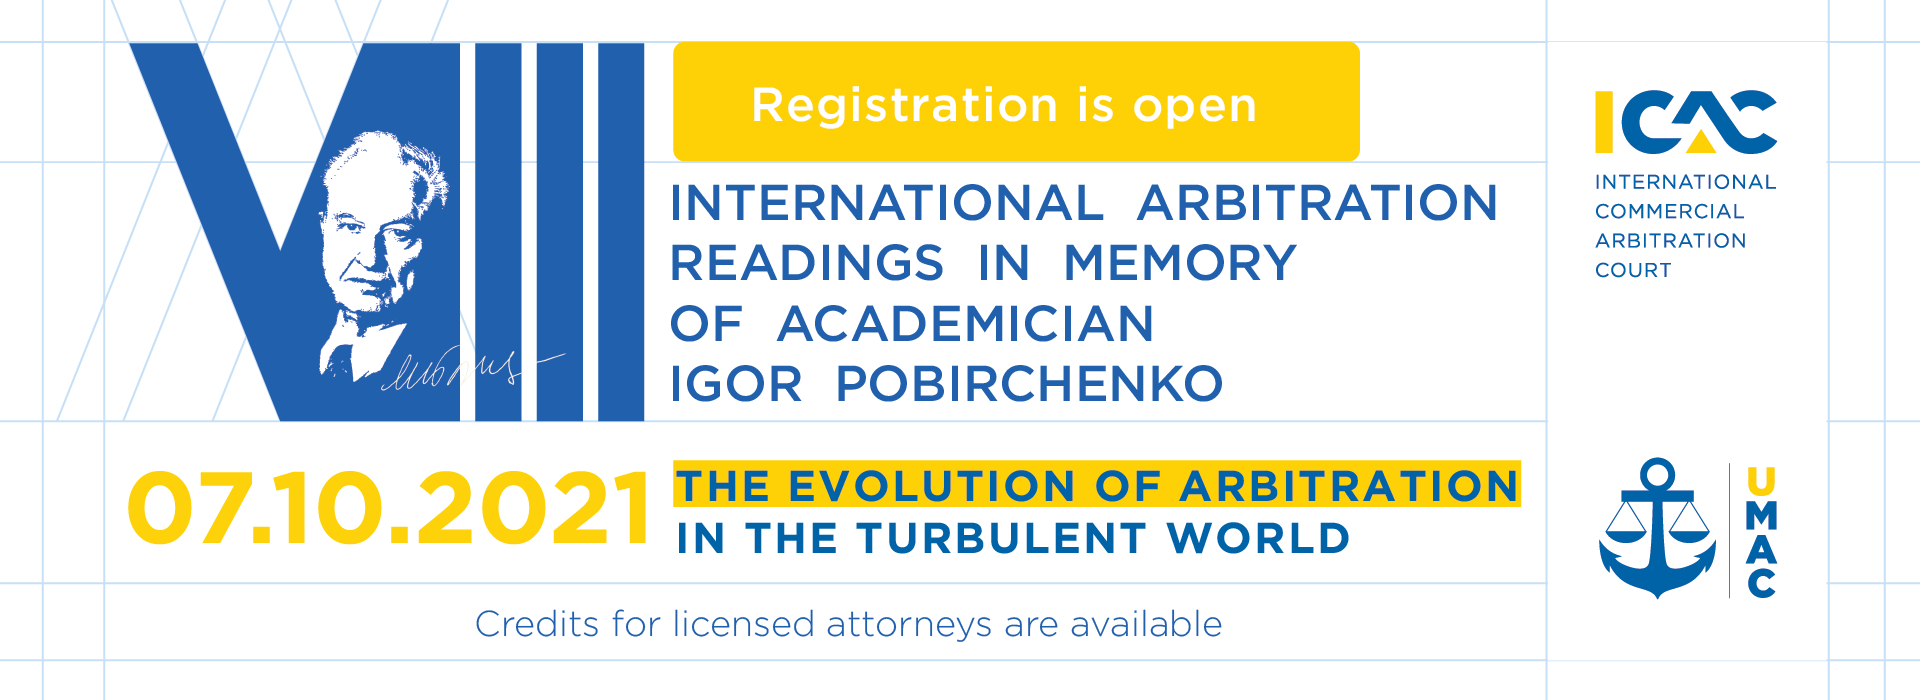 VIII International Arbitration Readings in Memory of Academician Igor Pobirchenko